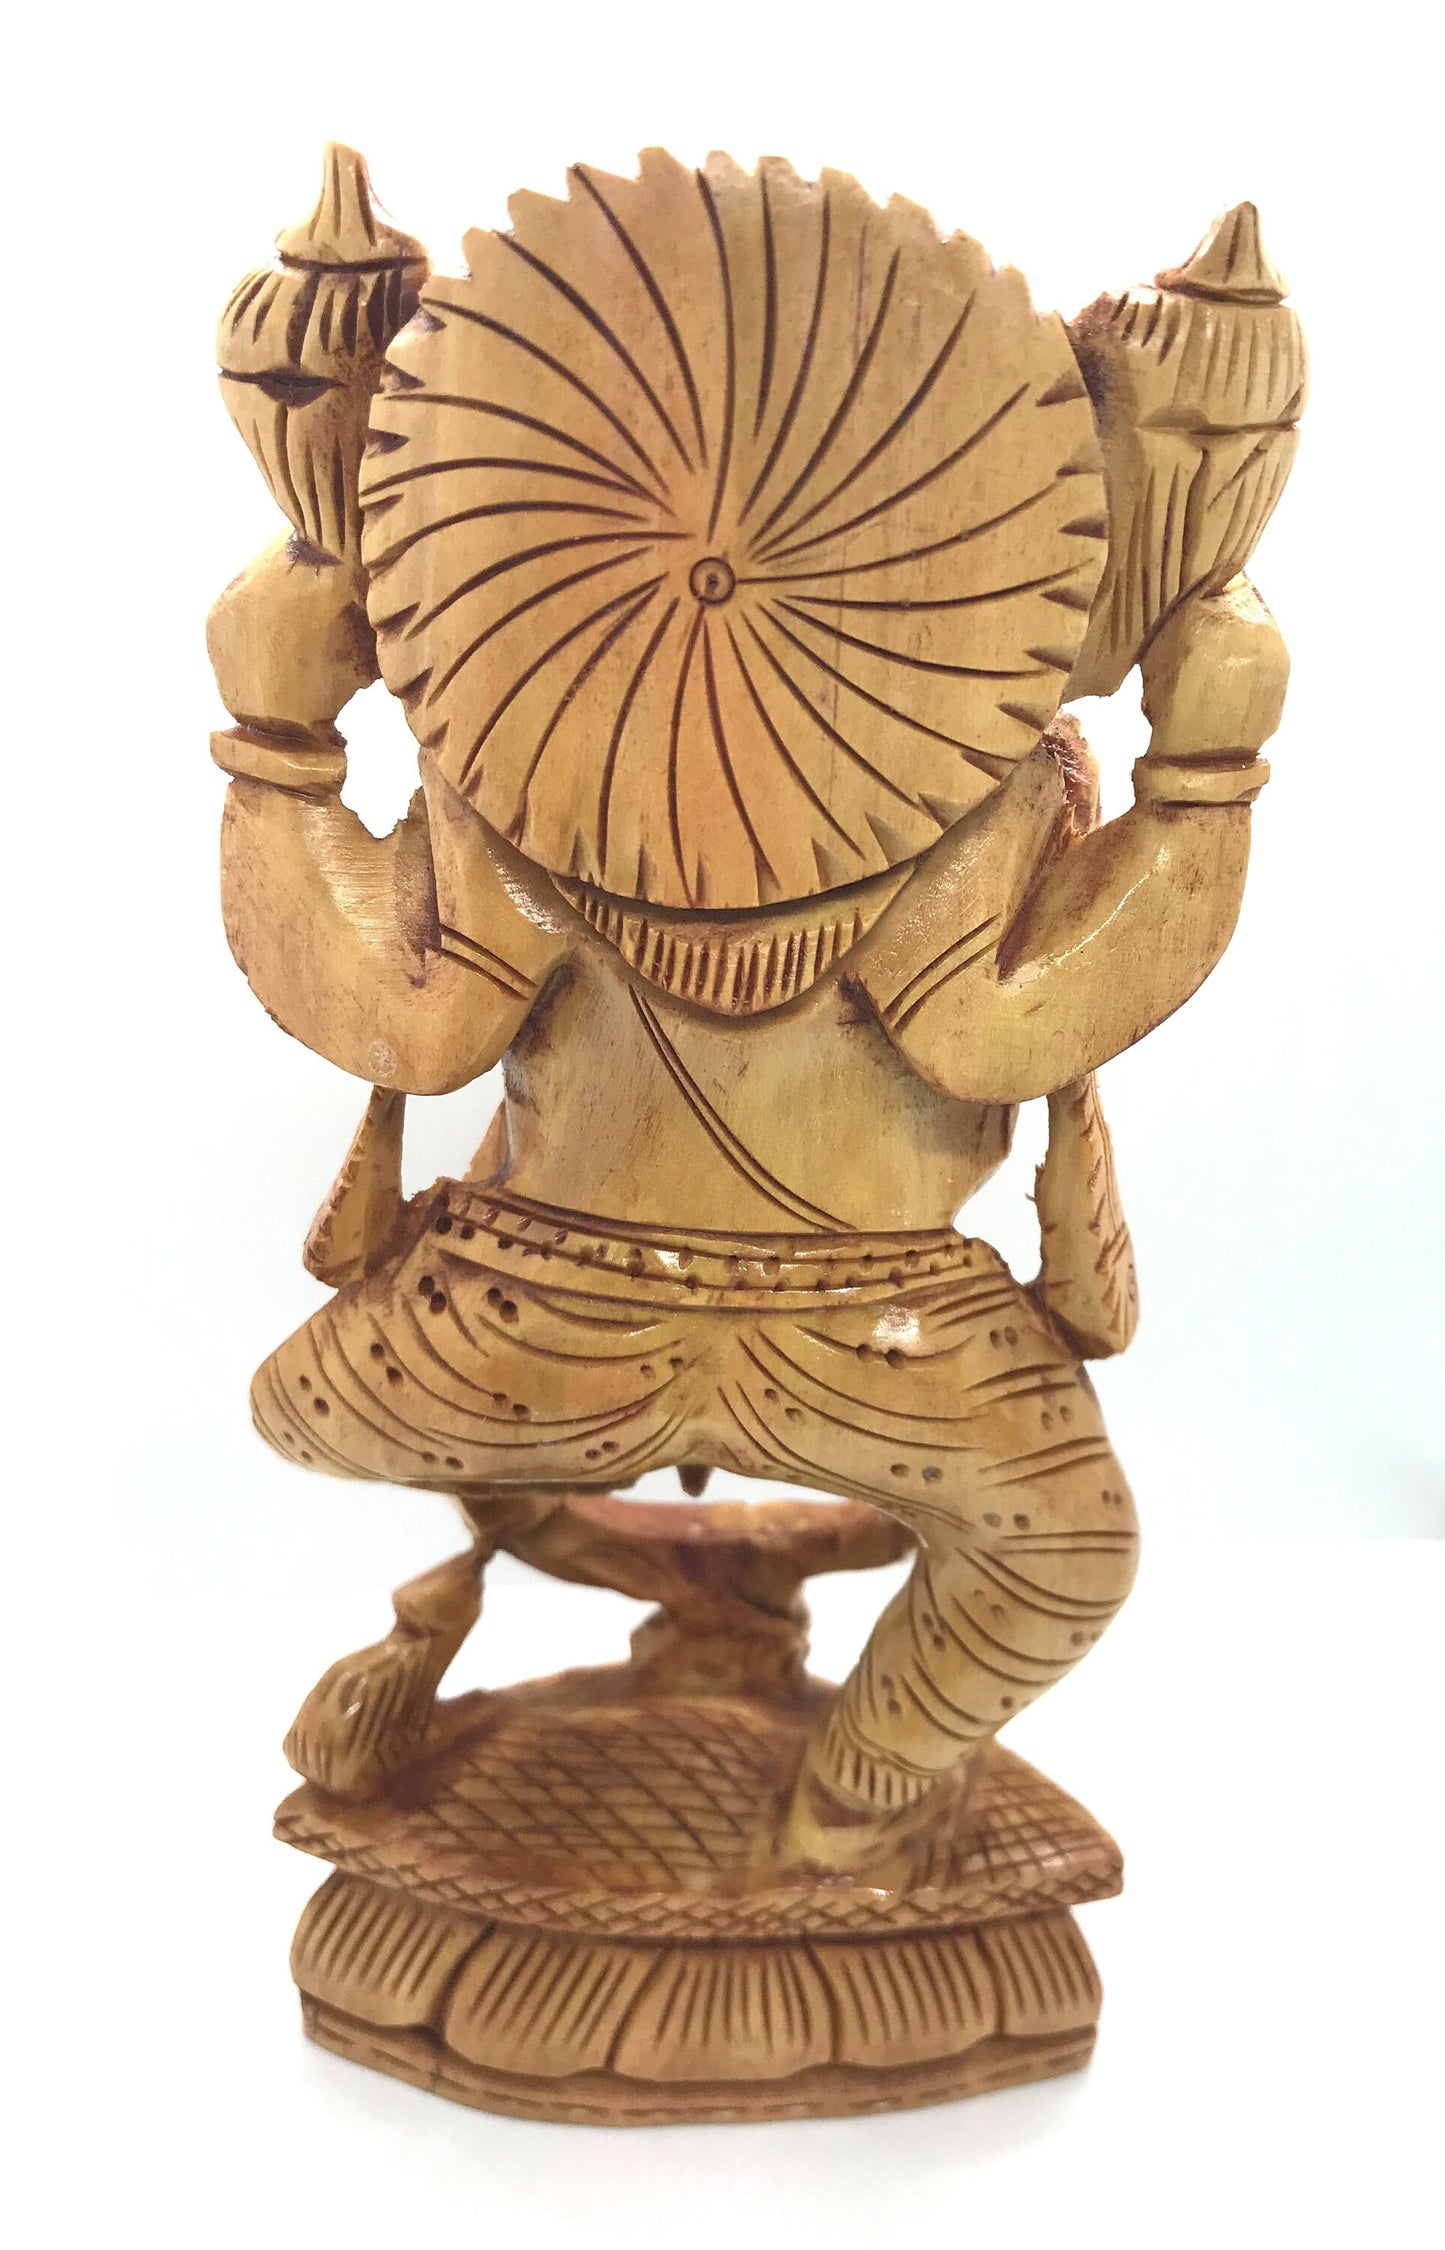 GANESHA Statue - Ganesh wooden idol - GANPATI wooden hand carved 6 inches statue - Hindu Elephant God GANESH - good luck success prosperity